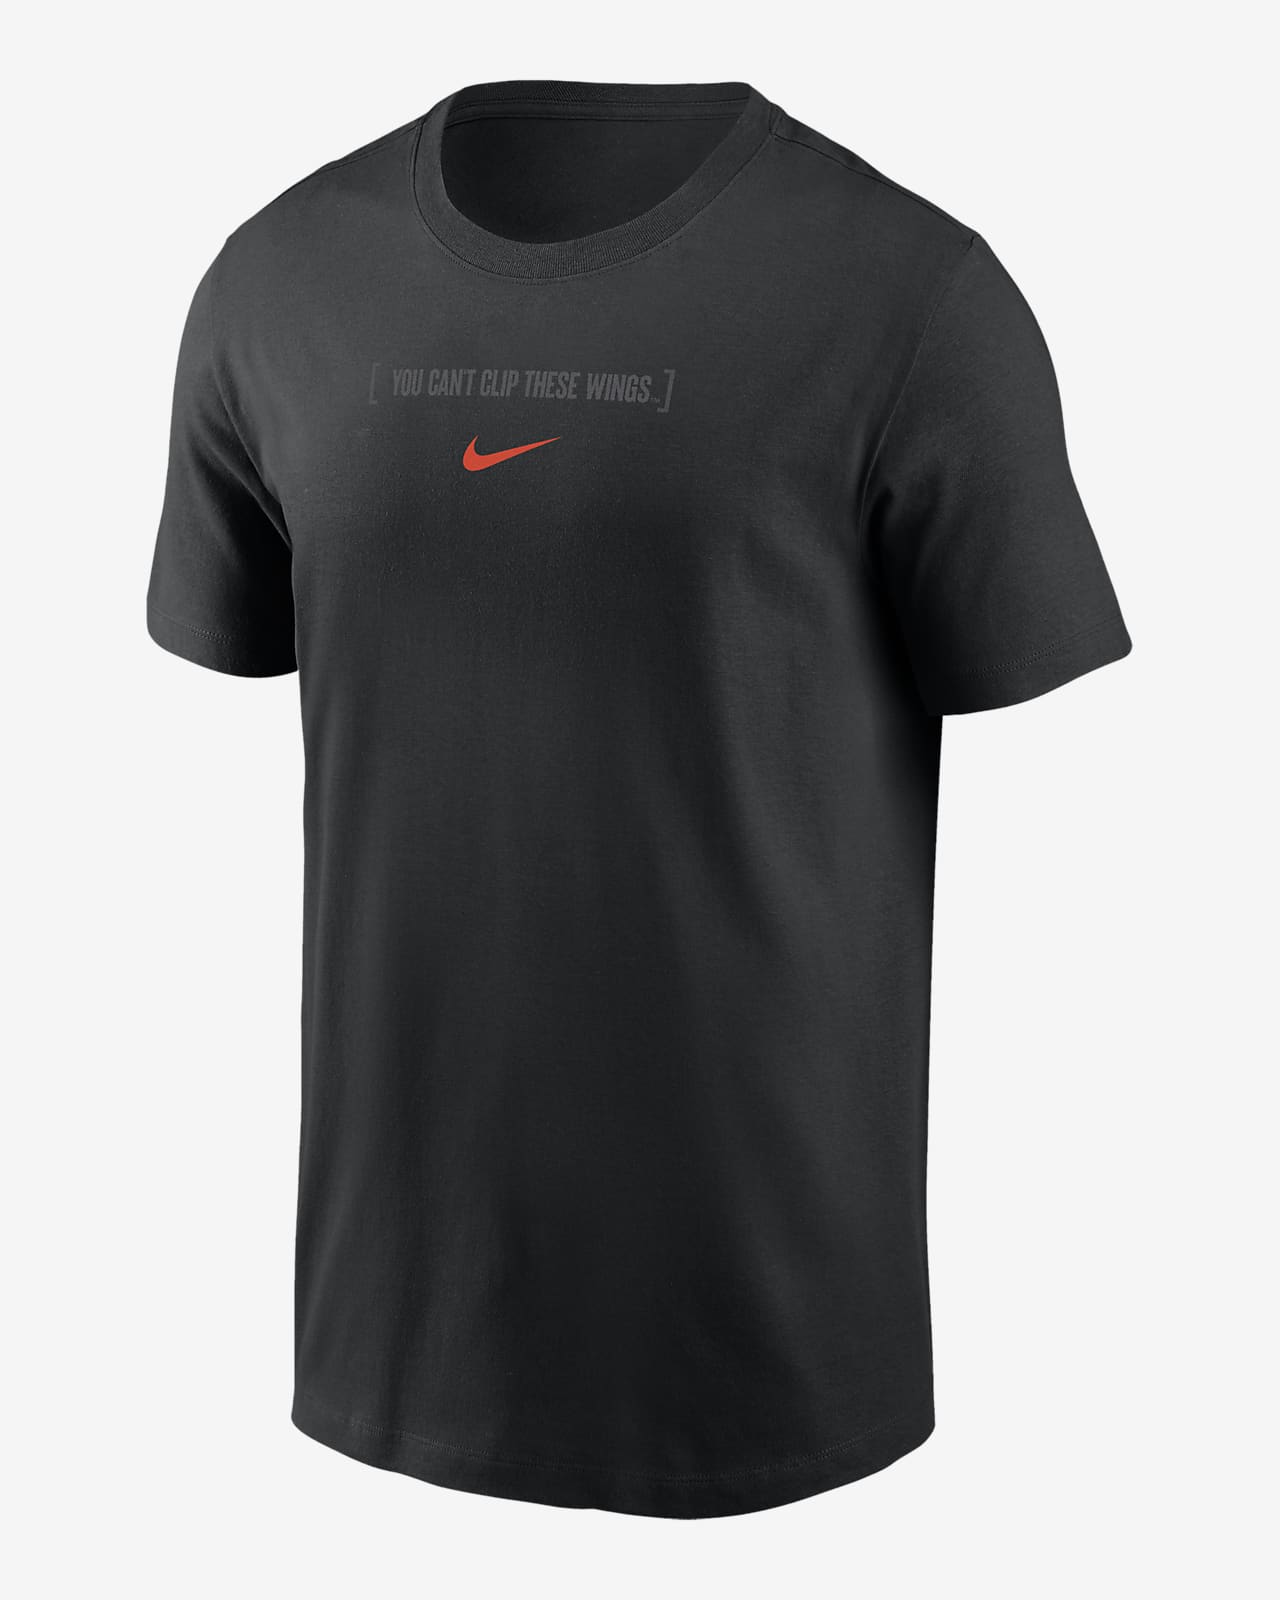 Baltimore Orioles City Connect Men's Nike MLB T-Shirt